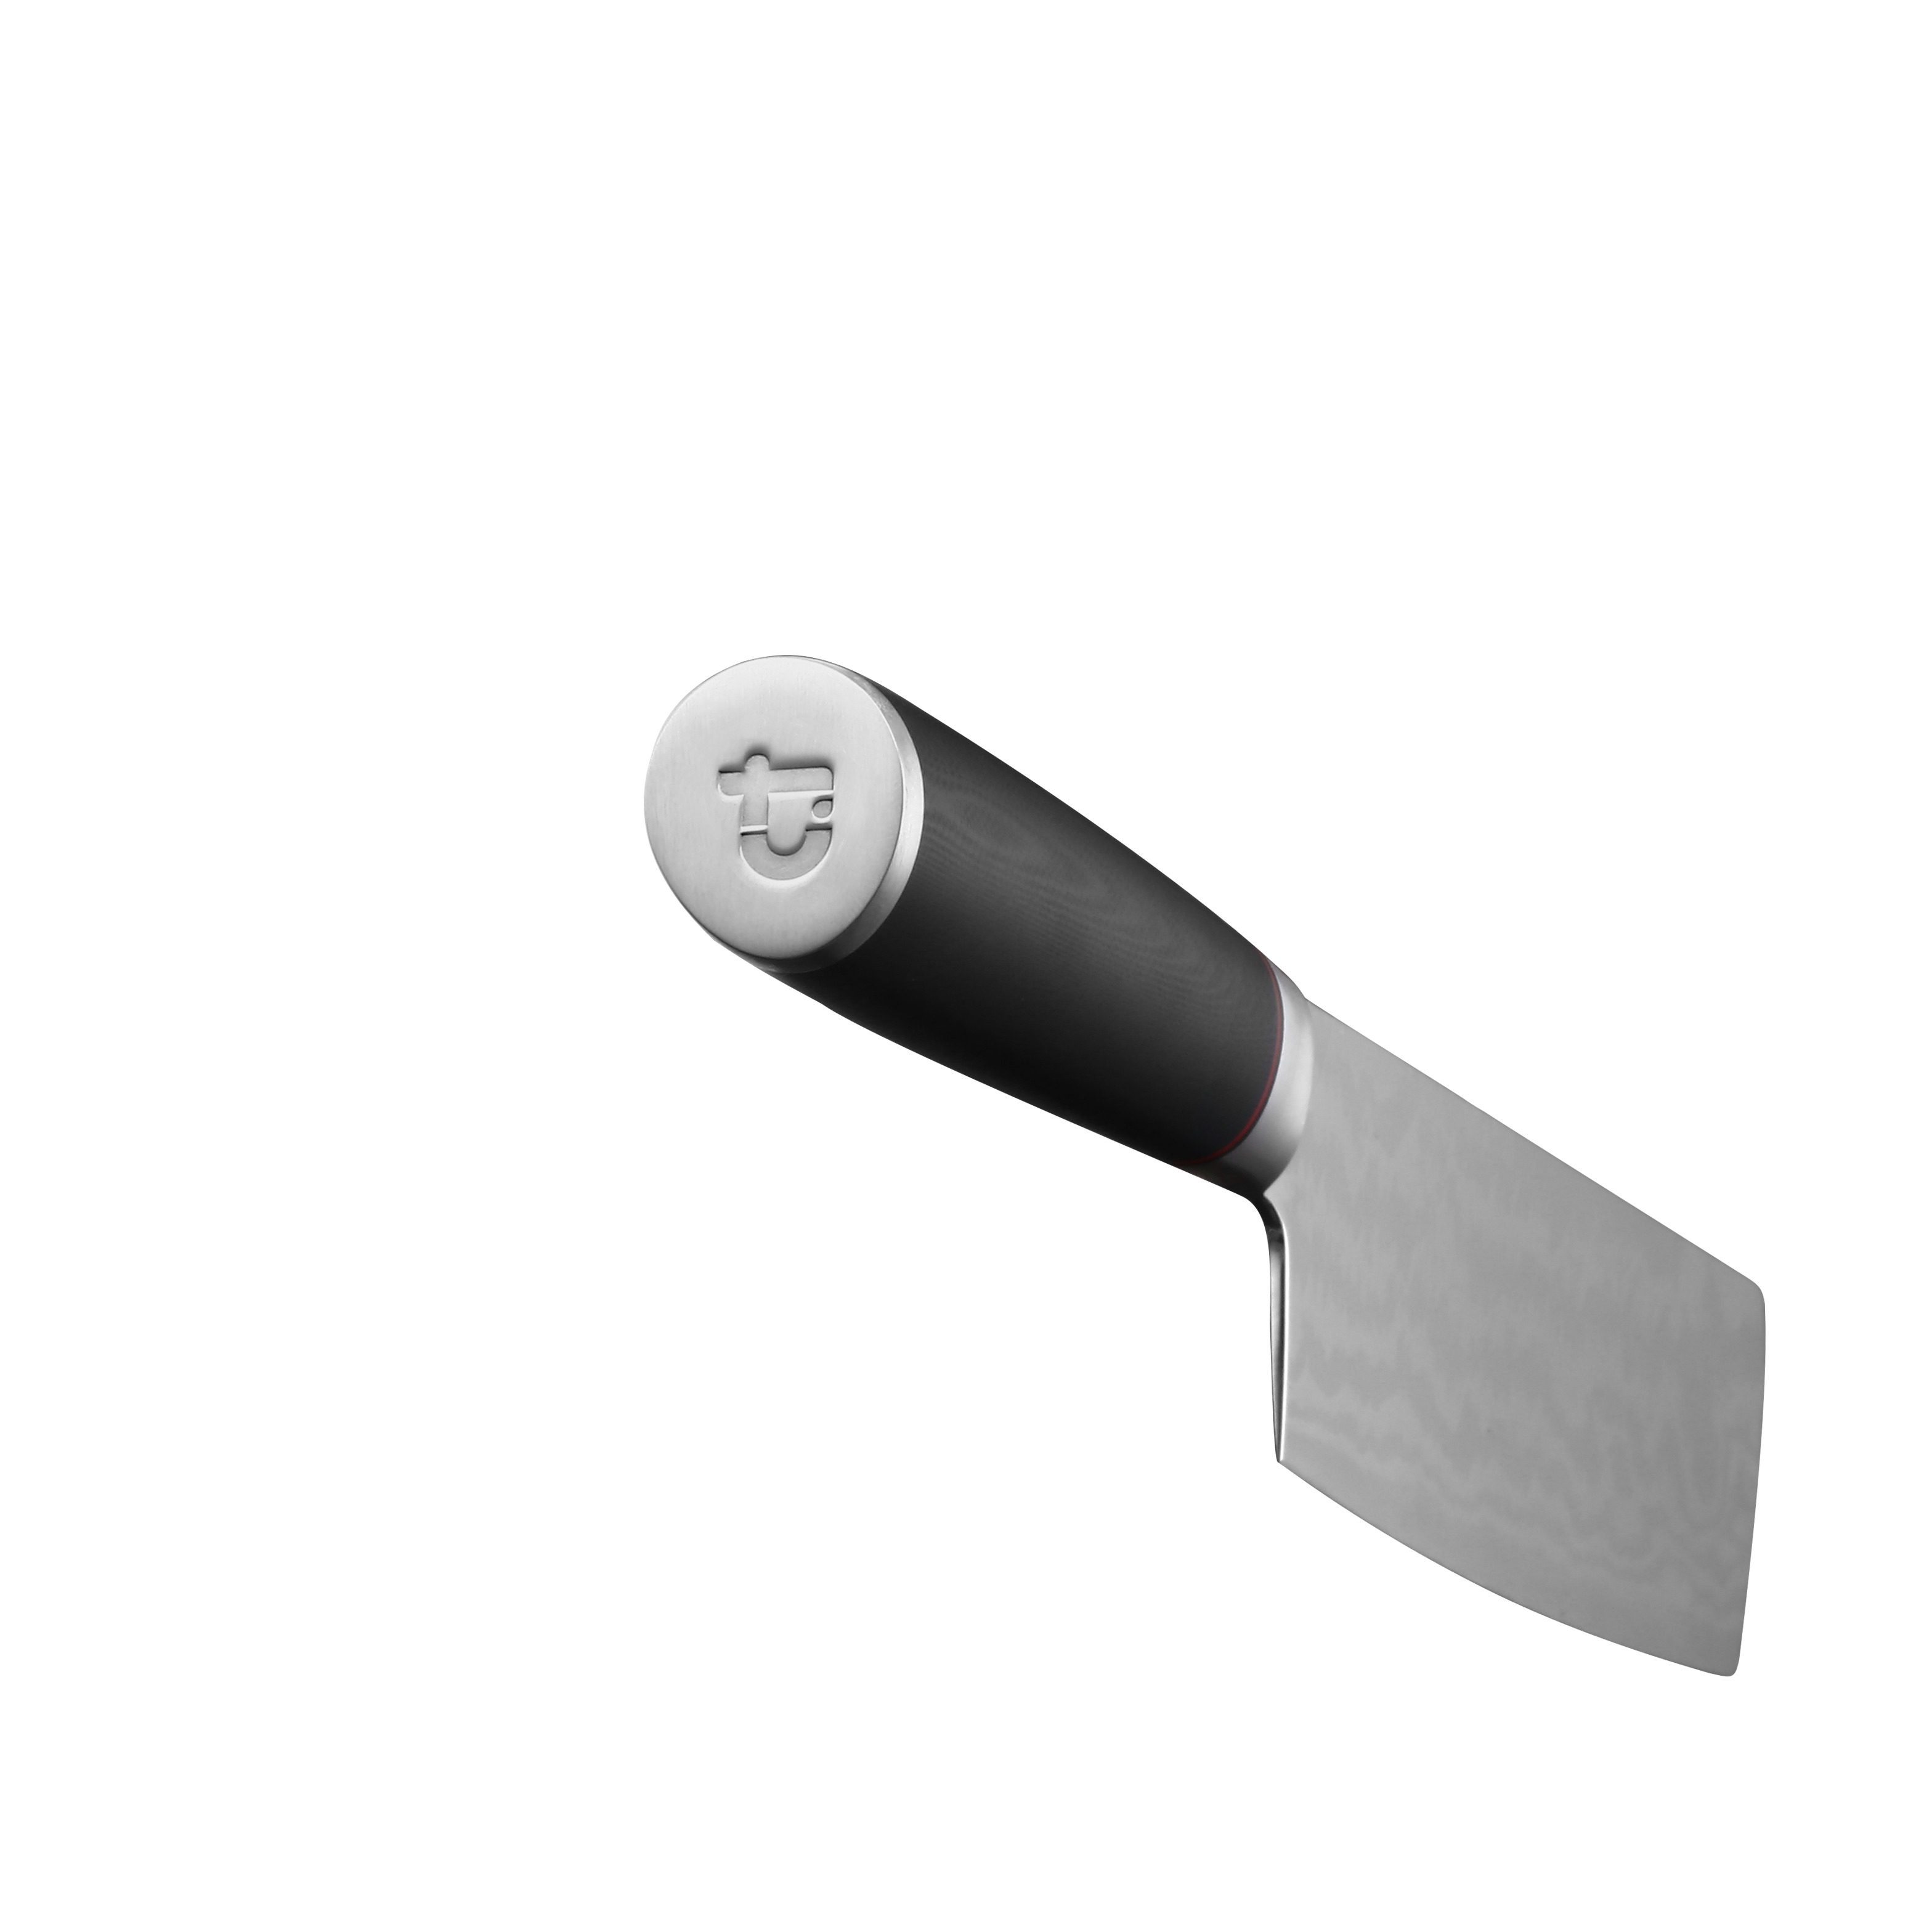 Кухонные ножи tuotown. Нож кухонный TUOTOWN dm003, сталь VG-10. Цай Дао нож. TUOTOWN ножи кухонные.